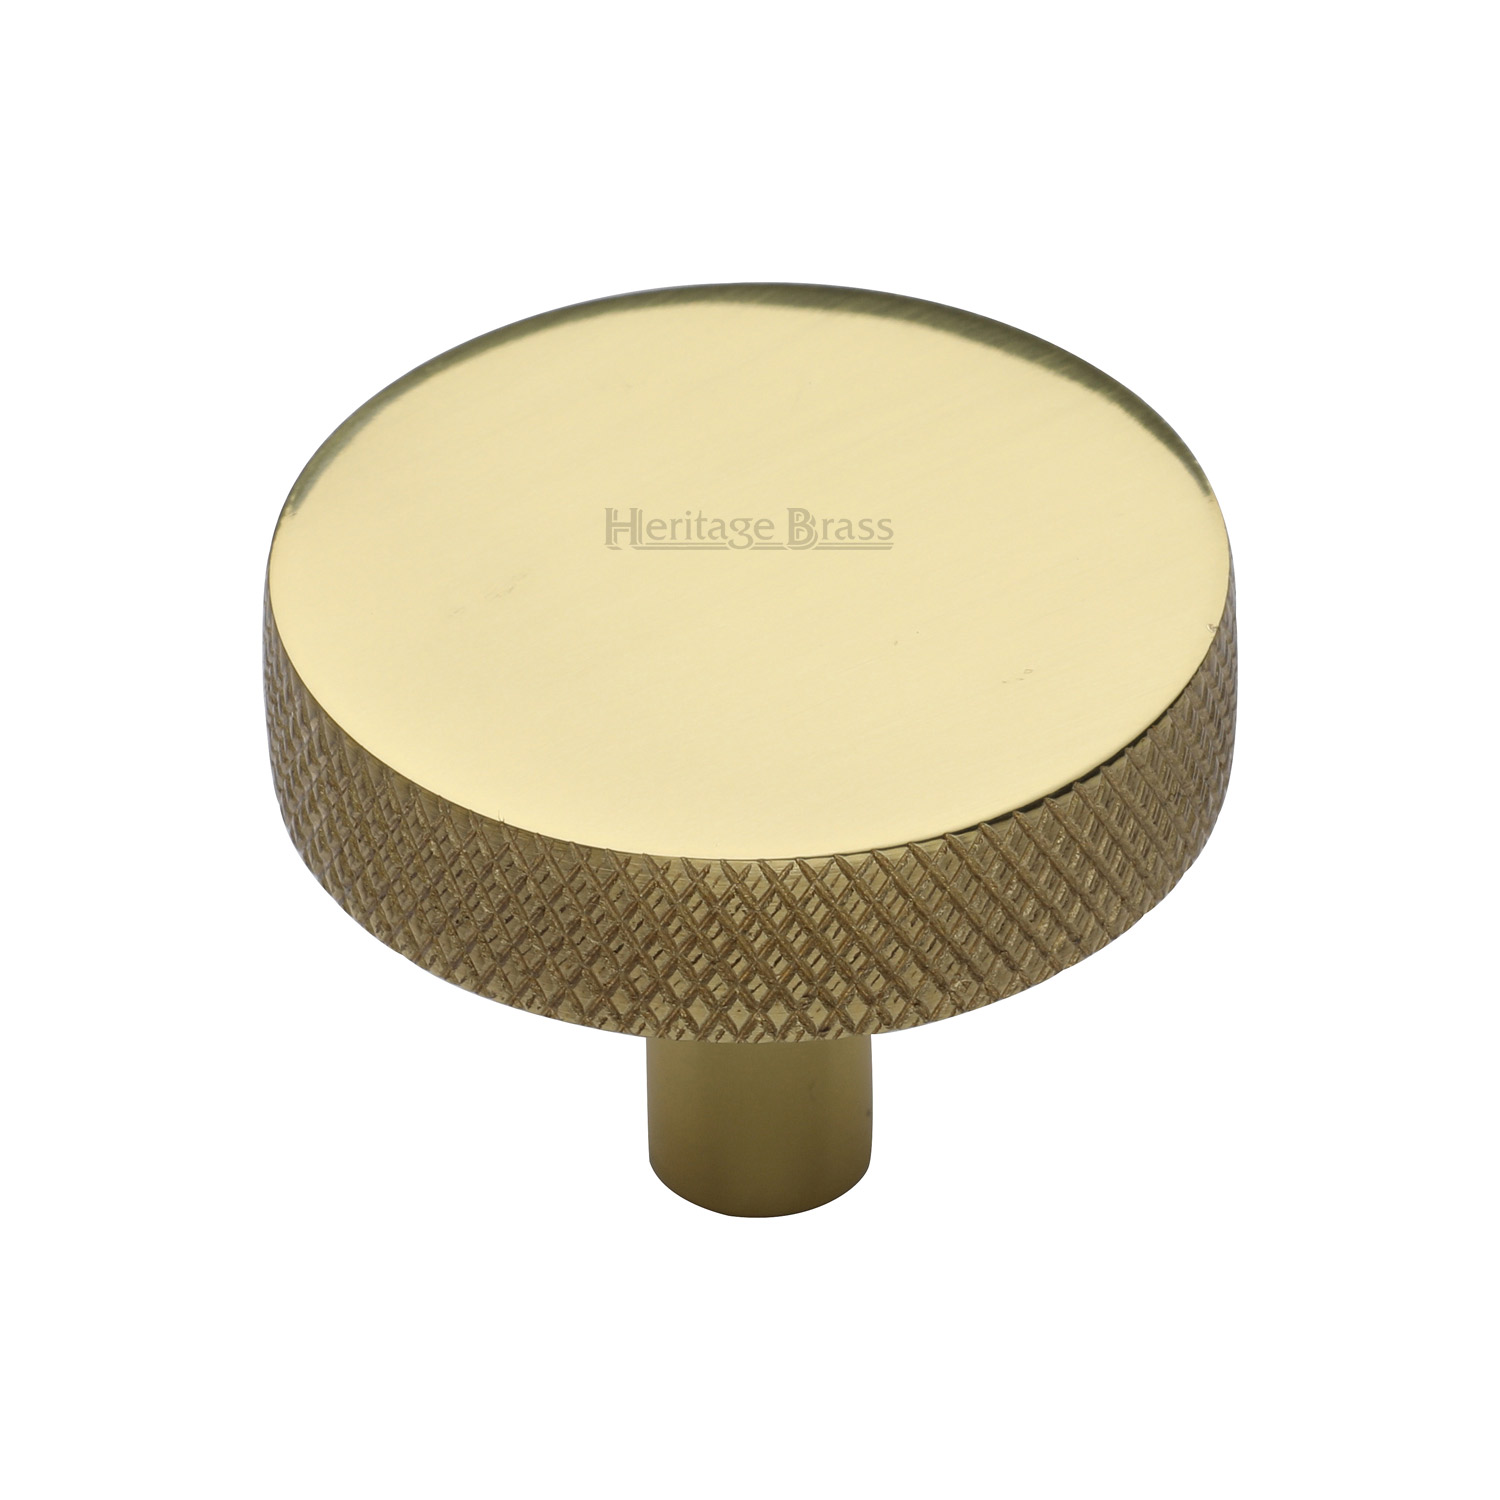 Heritage Brass Cabinet Knob Knurled Disc Design 38mm